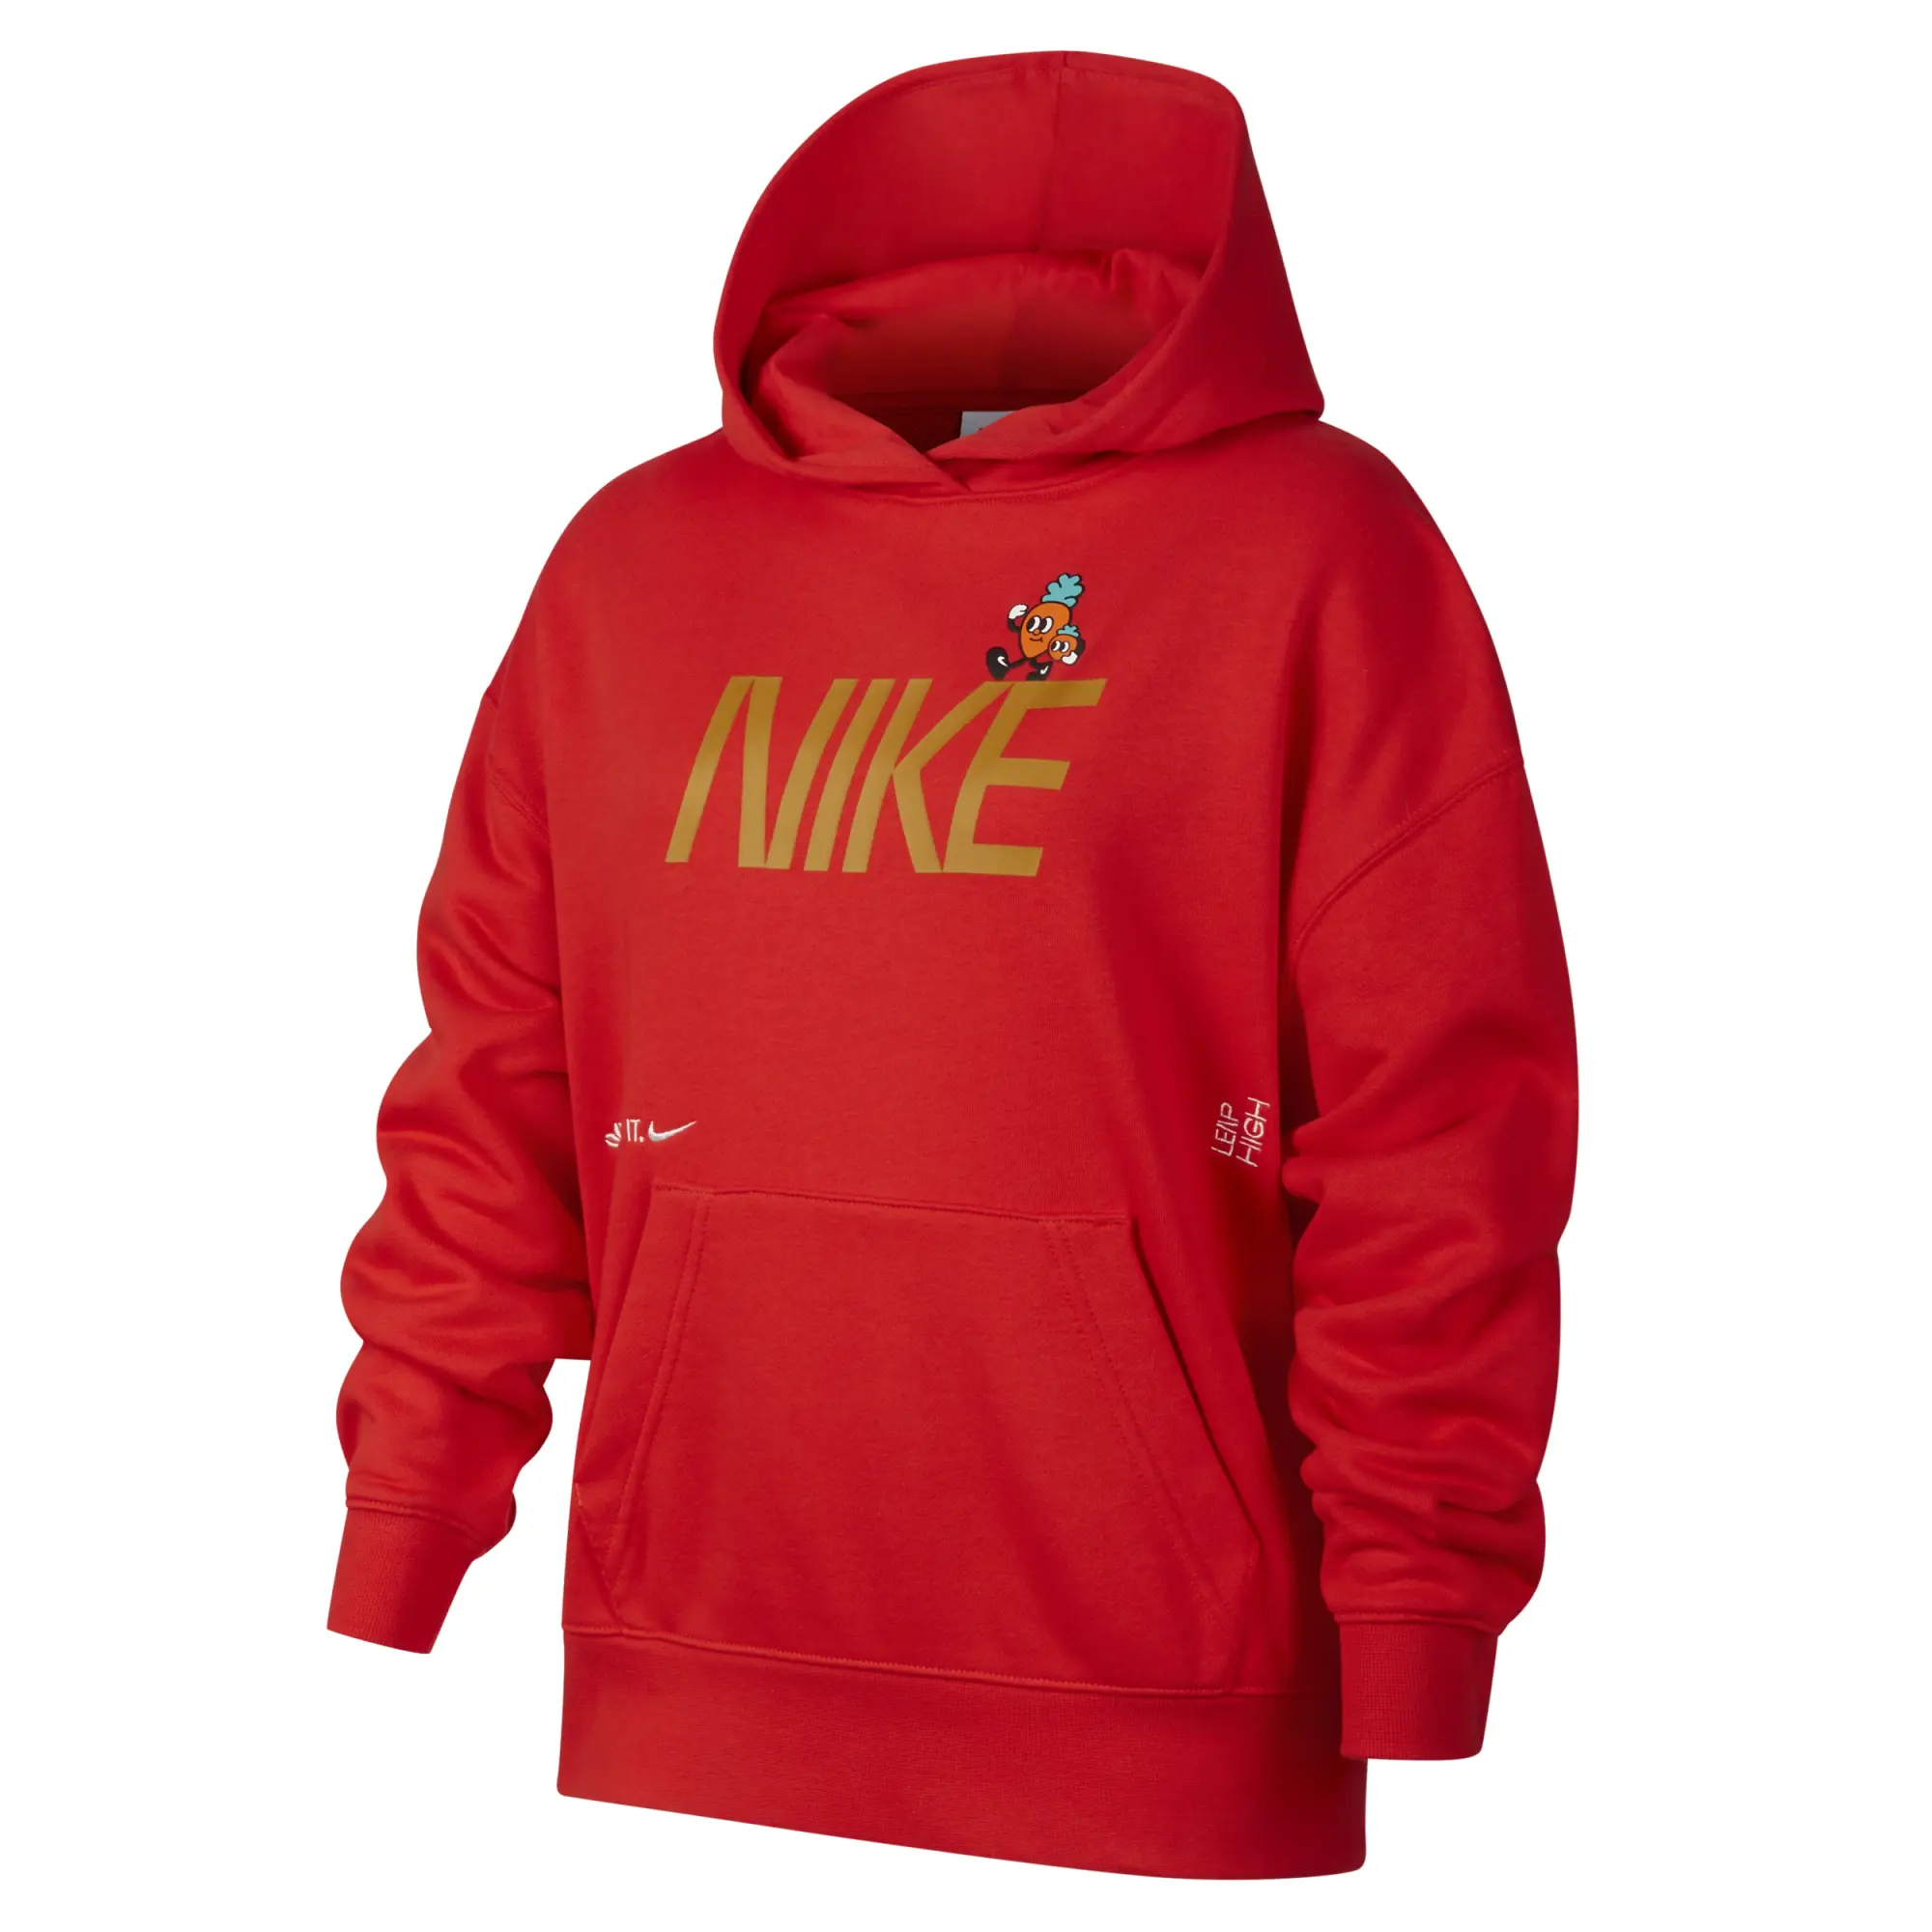 Nike Sportswear Older Kids' Pullover Fleece Hoodie - Red